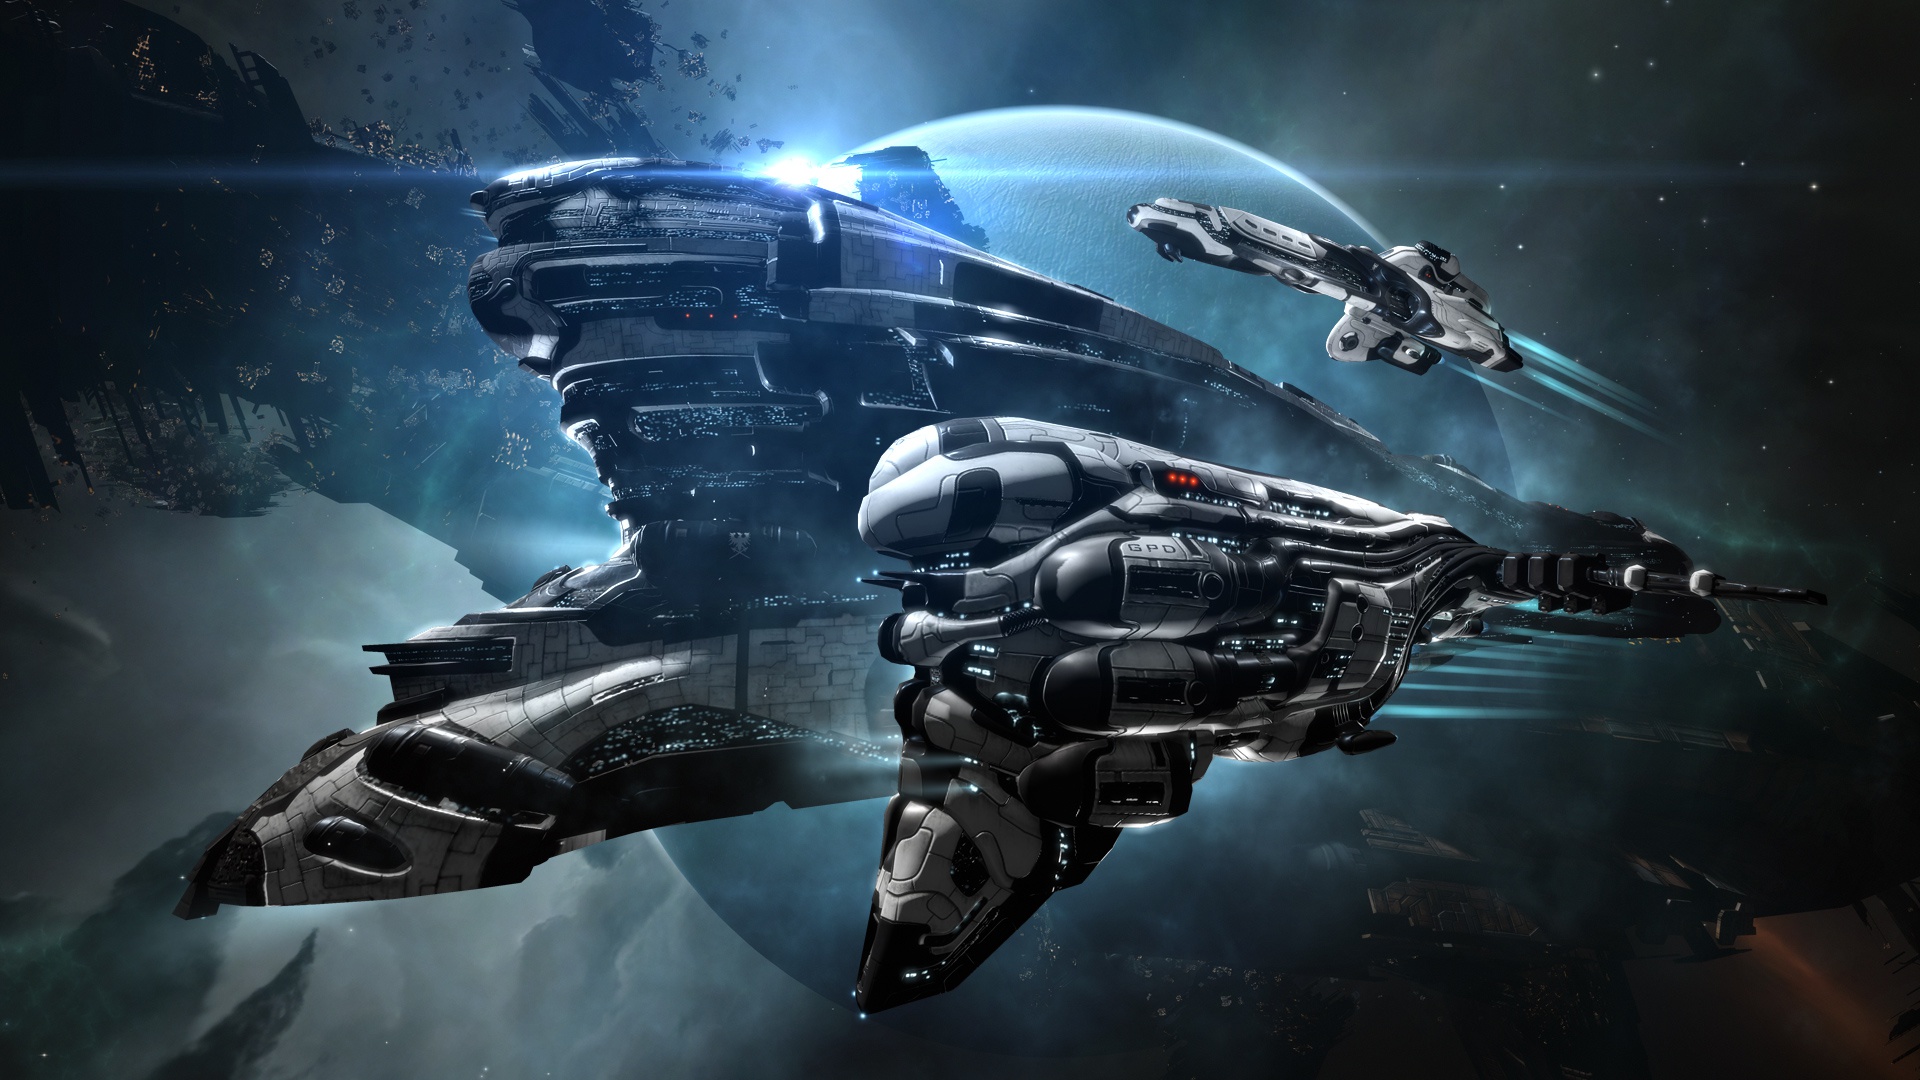 Eve Online Space Spaceship 1920x1080